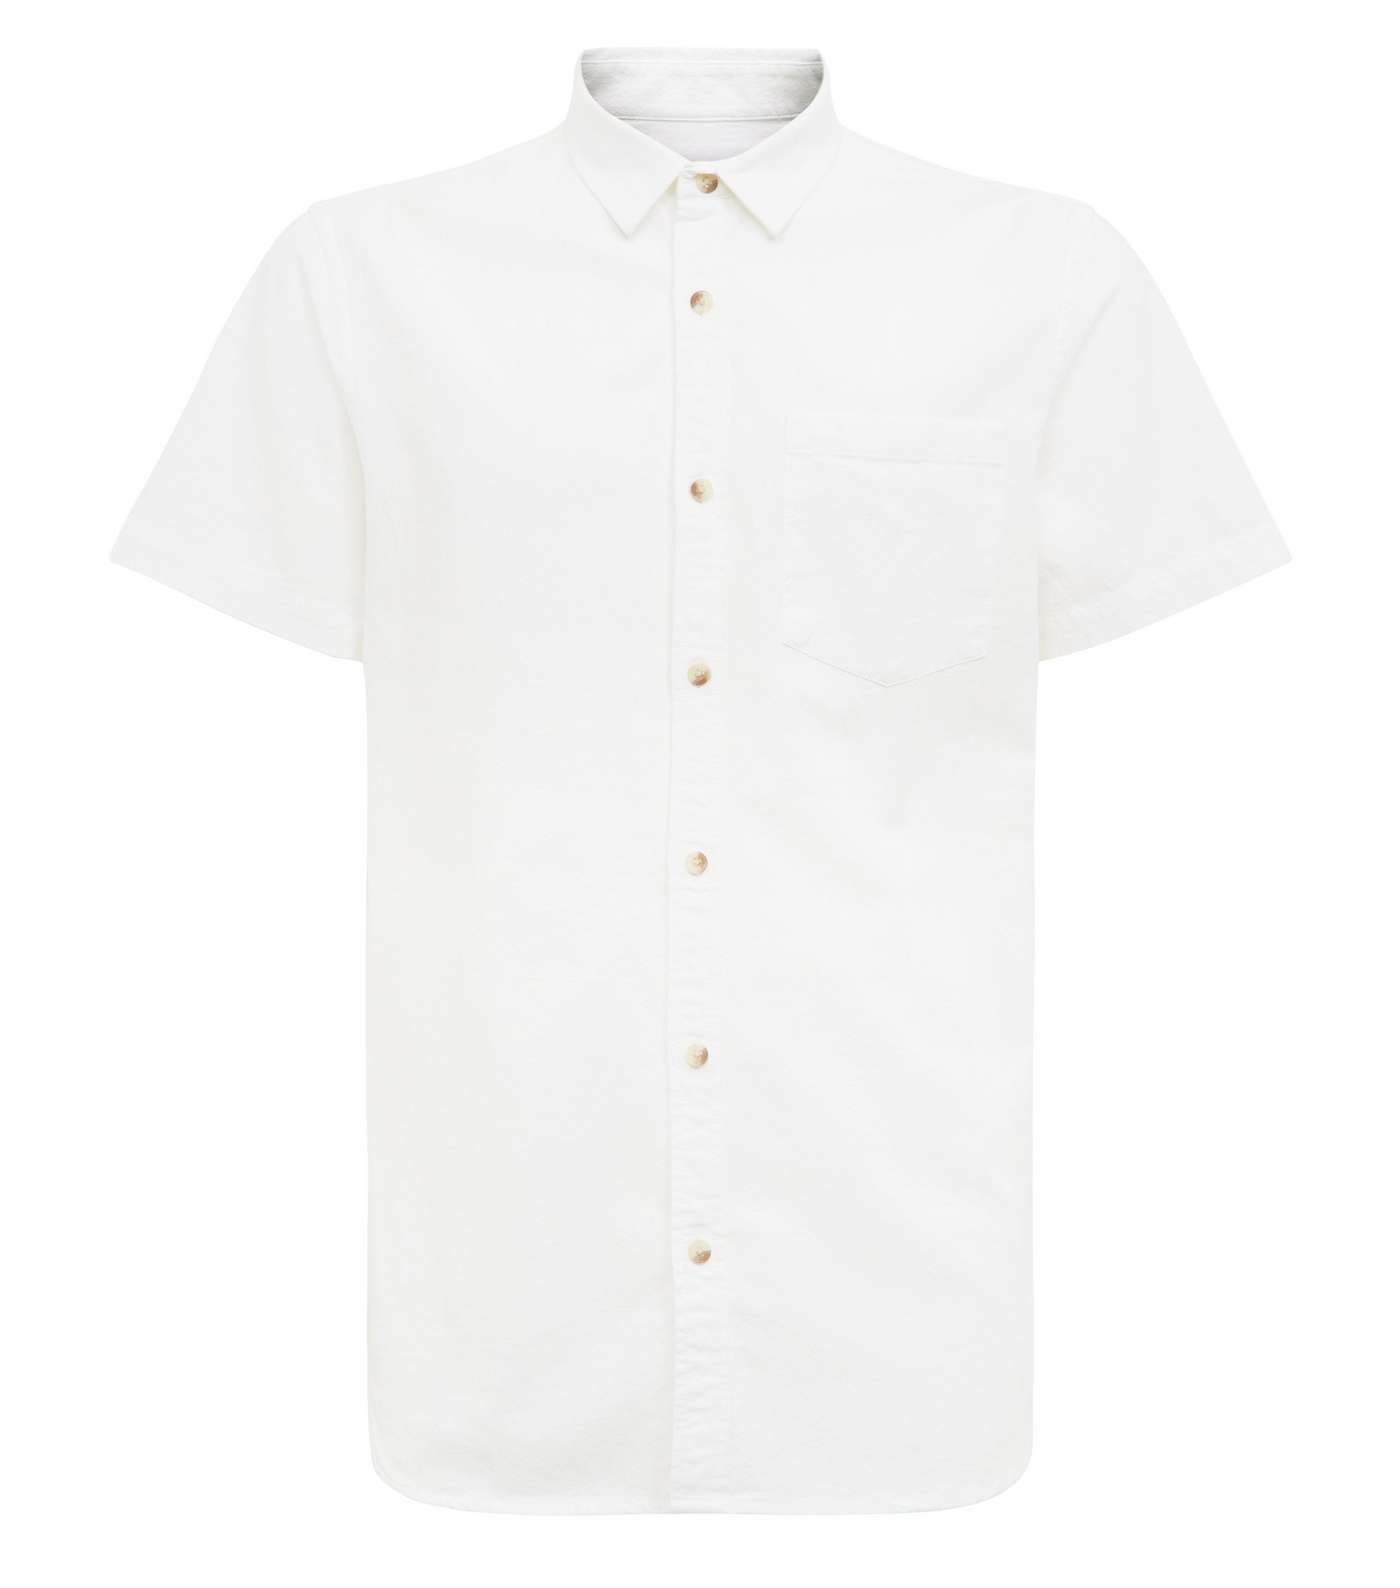 White Textured Short Sleeve Shirt Image 4